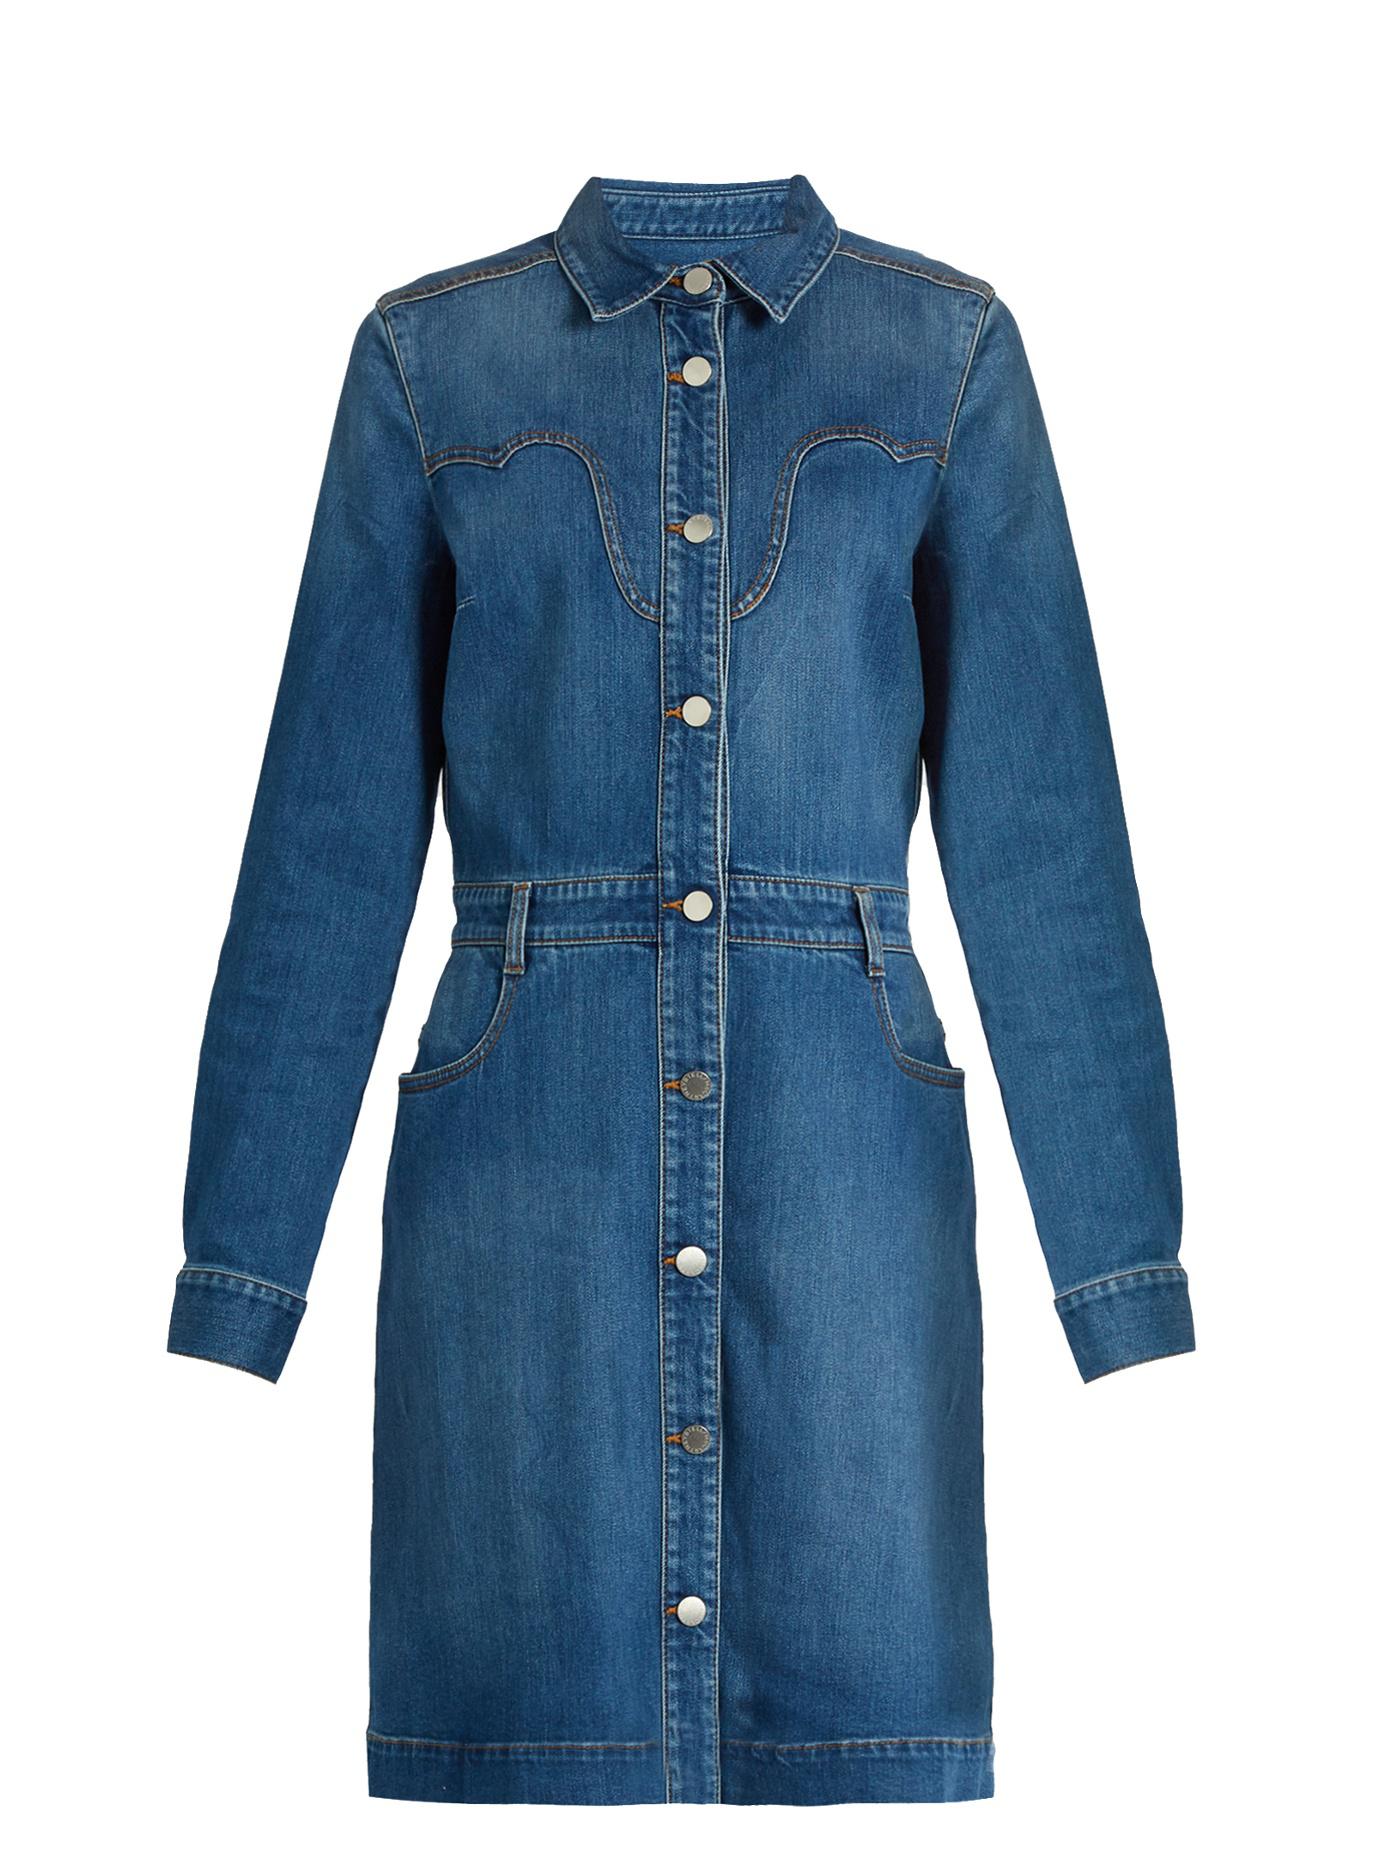 Stella McCartney Western Denim Dress in Blue | Lyst